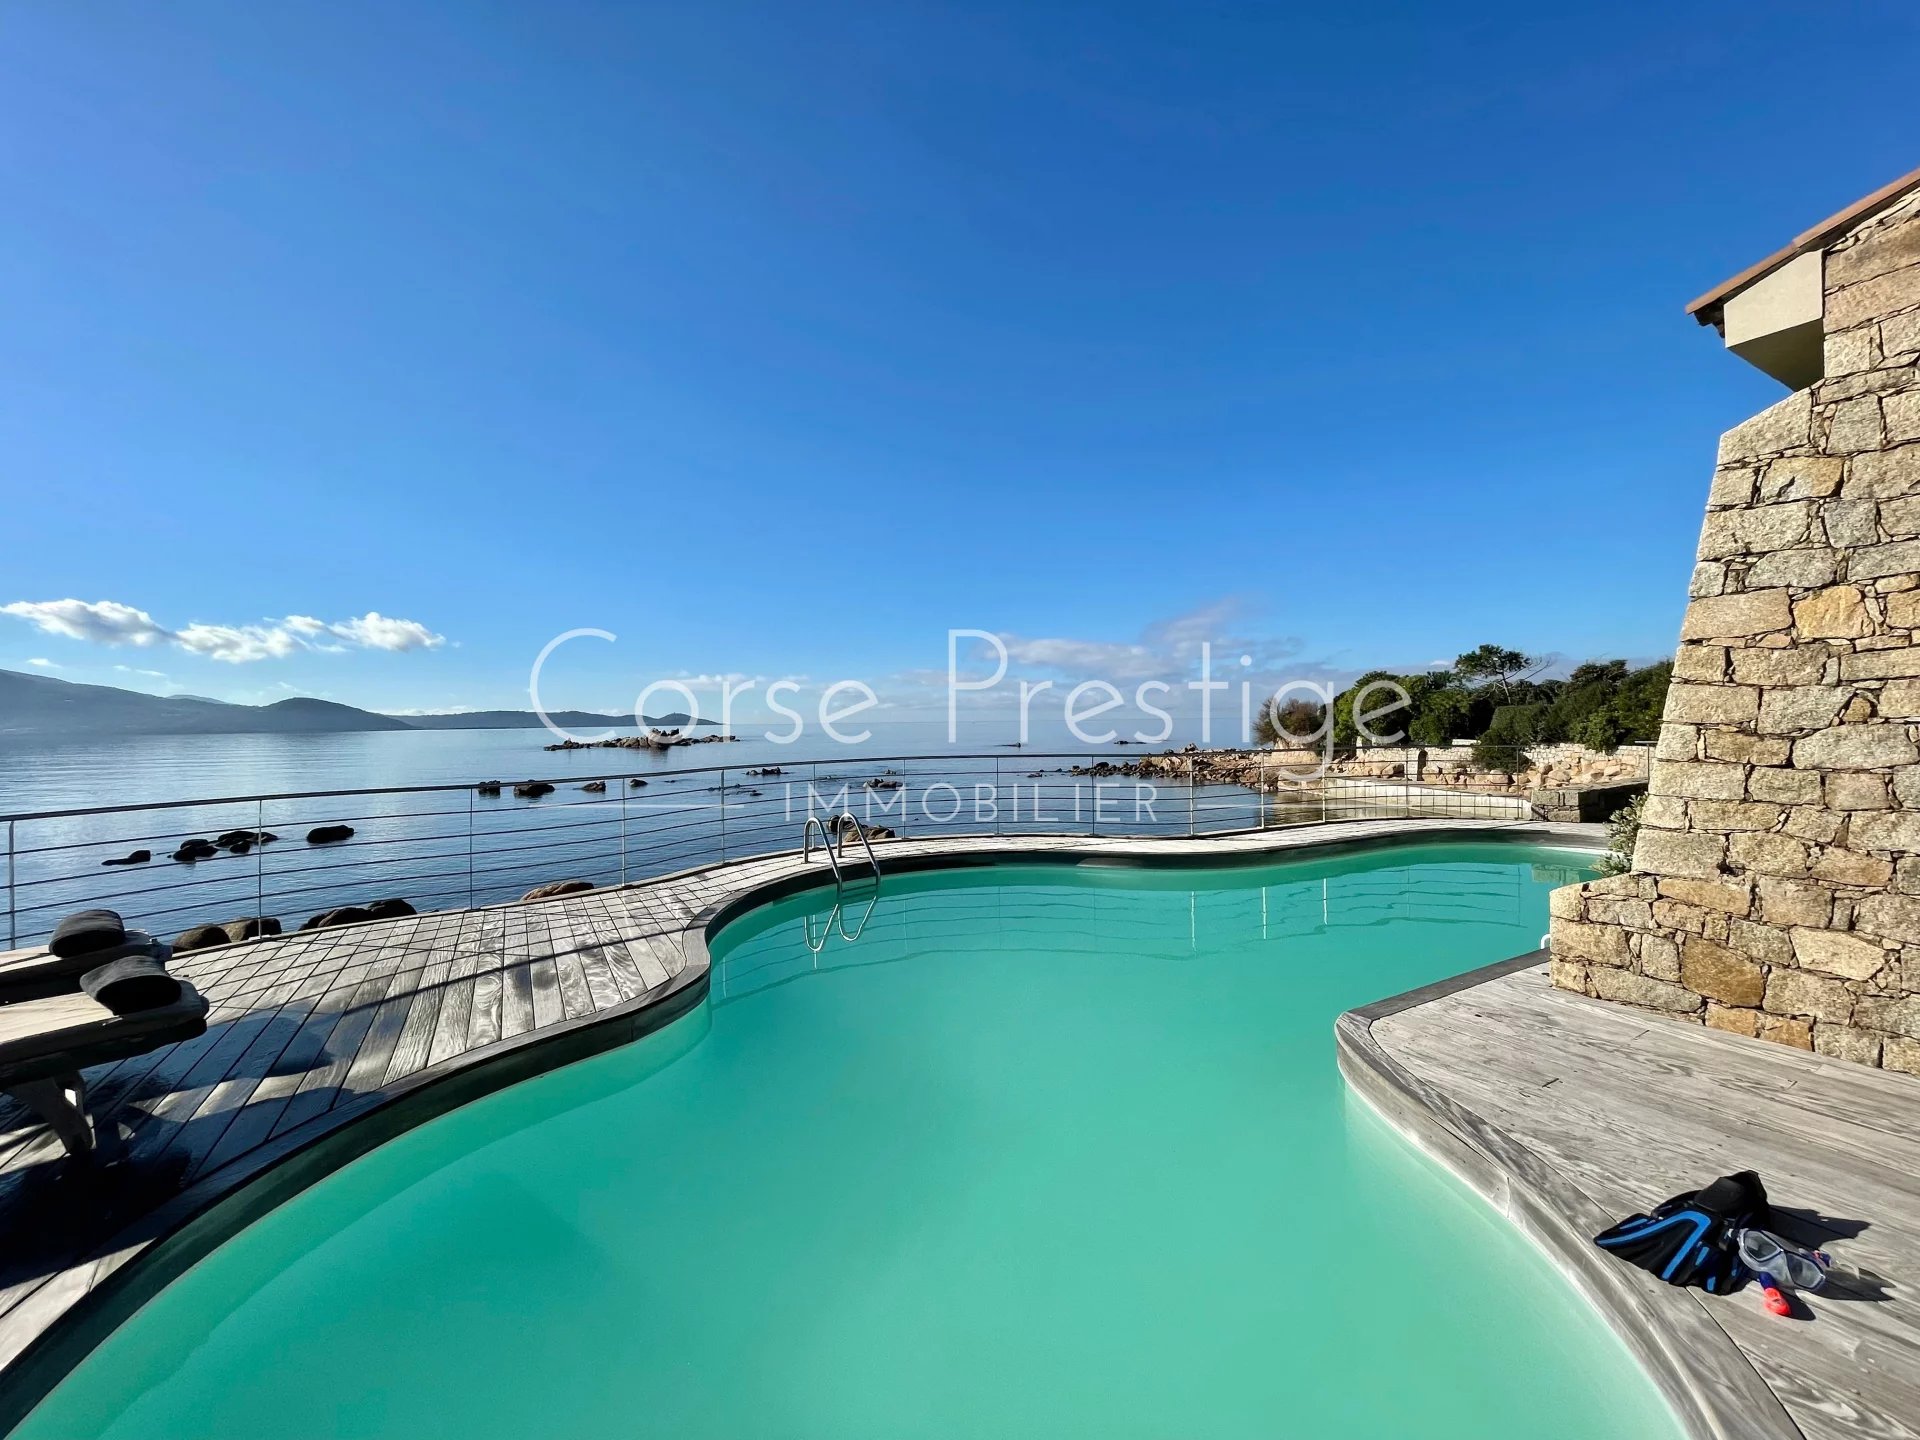 waterfront villa for rent in corsica -  isolella image2